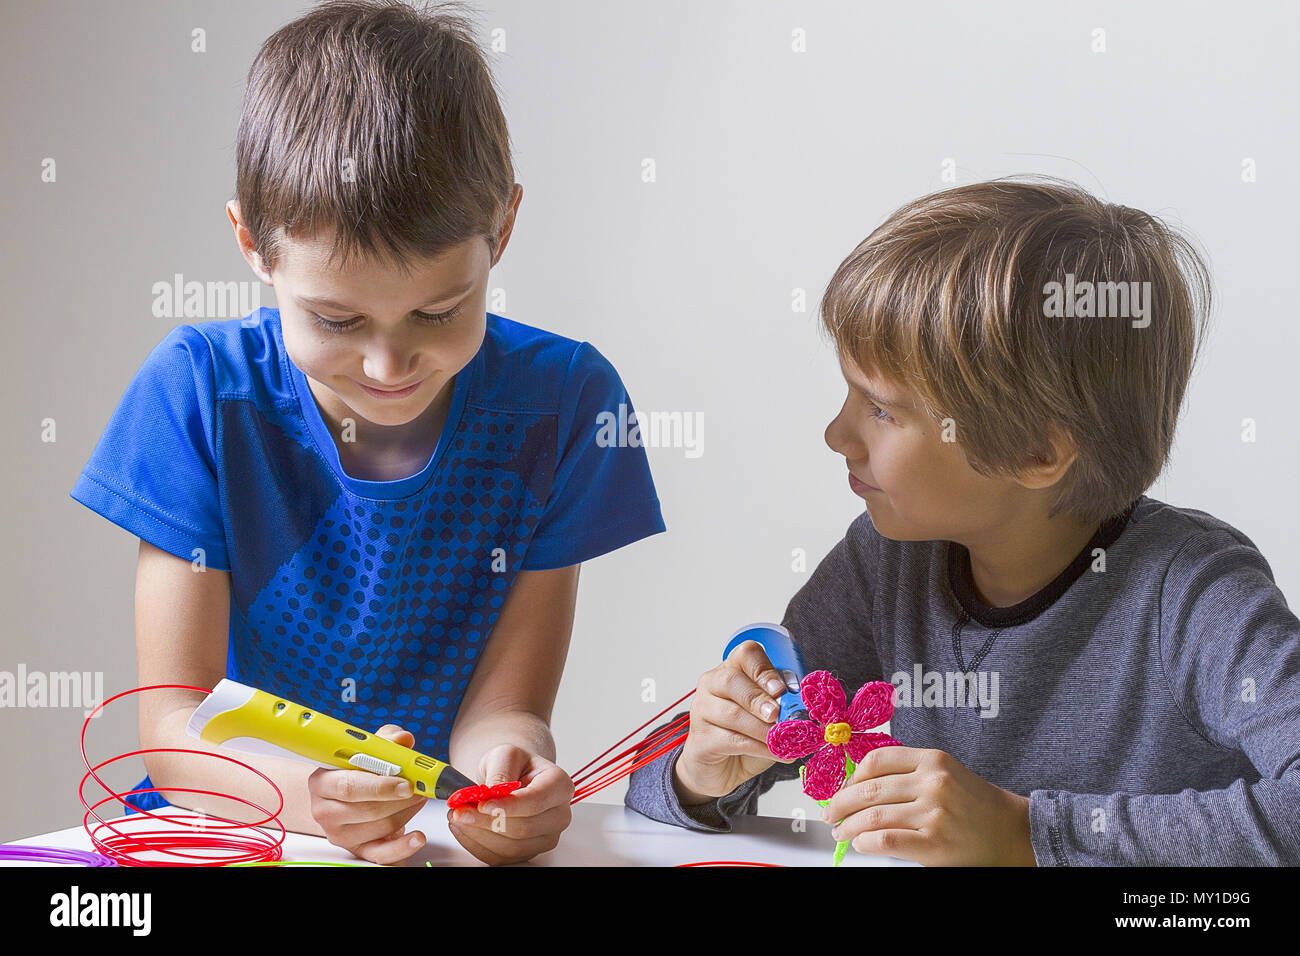 Pluma de impresión 3d niños fotografías e imágenes de alta resolución -  Alamy